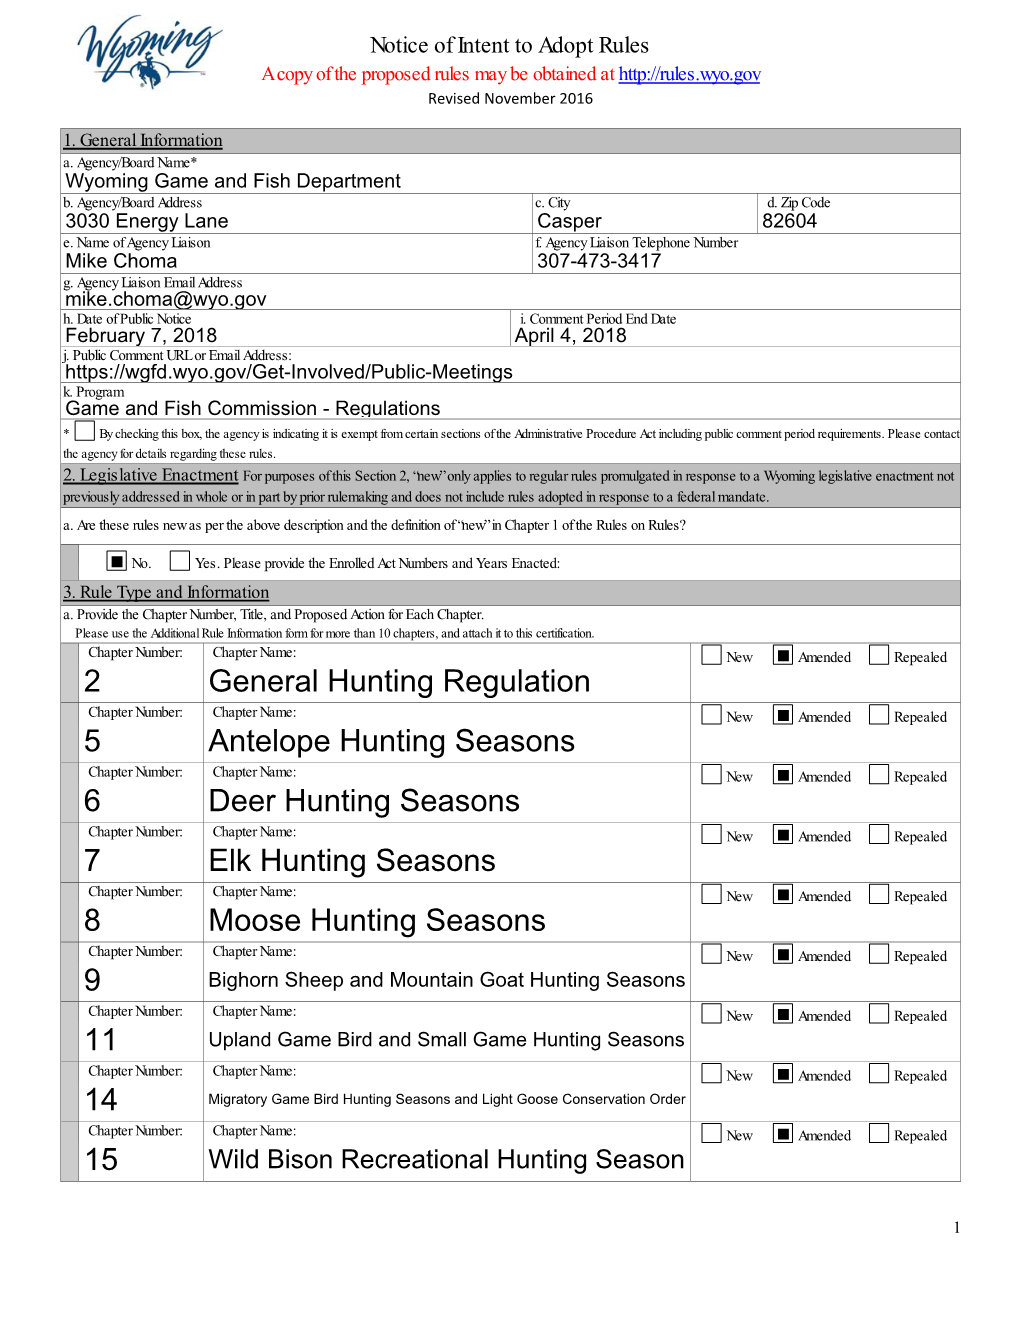 2 General Hunting Regulation 5 Antelope Hunting Seasons 6 Deer